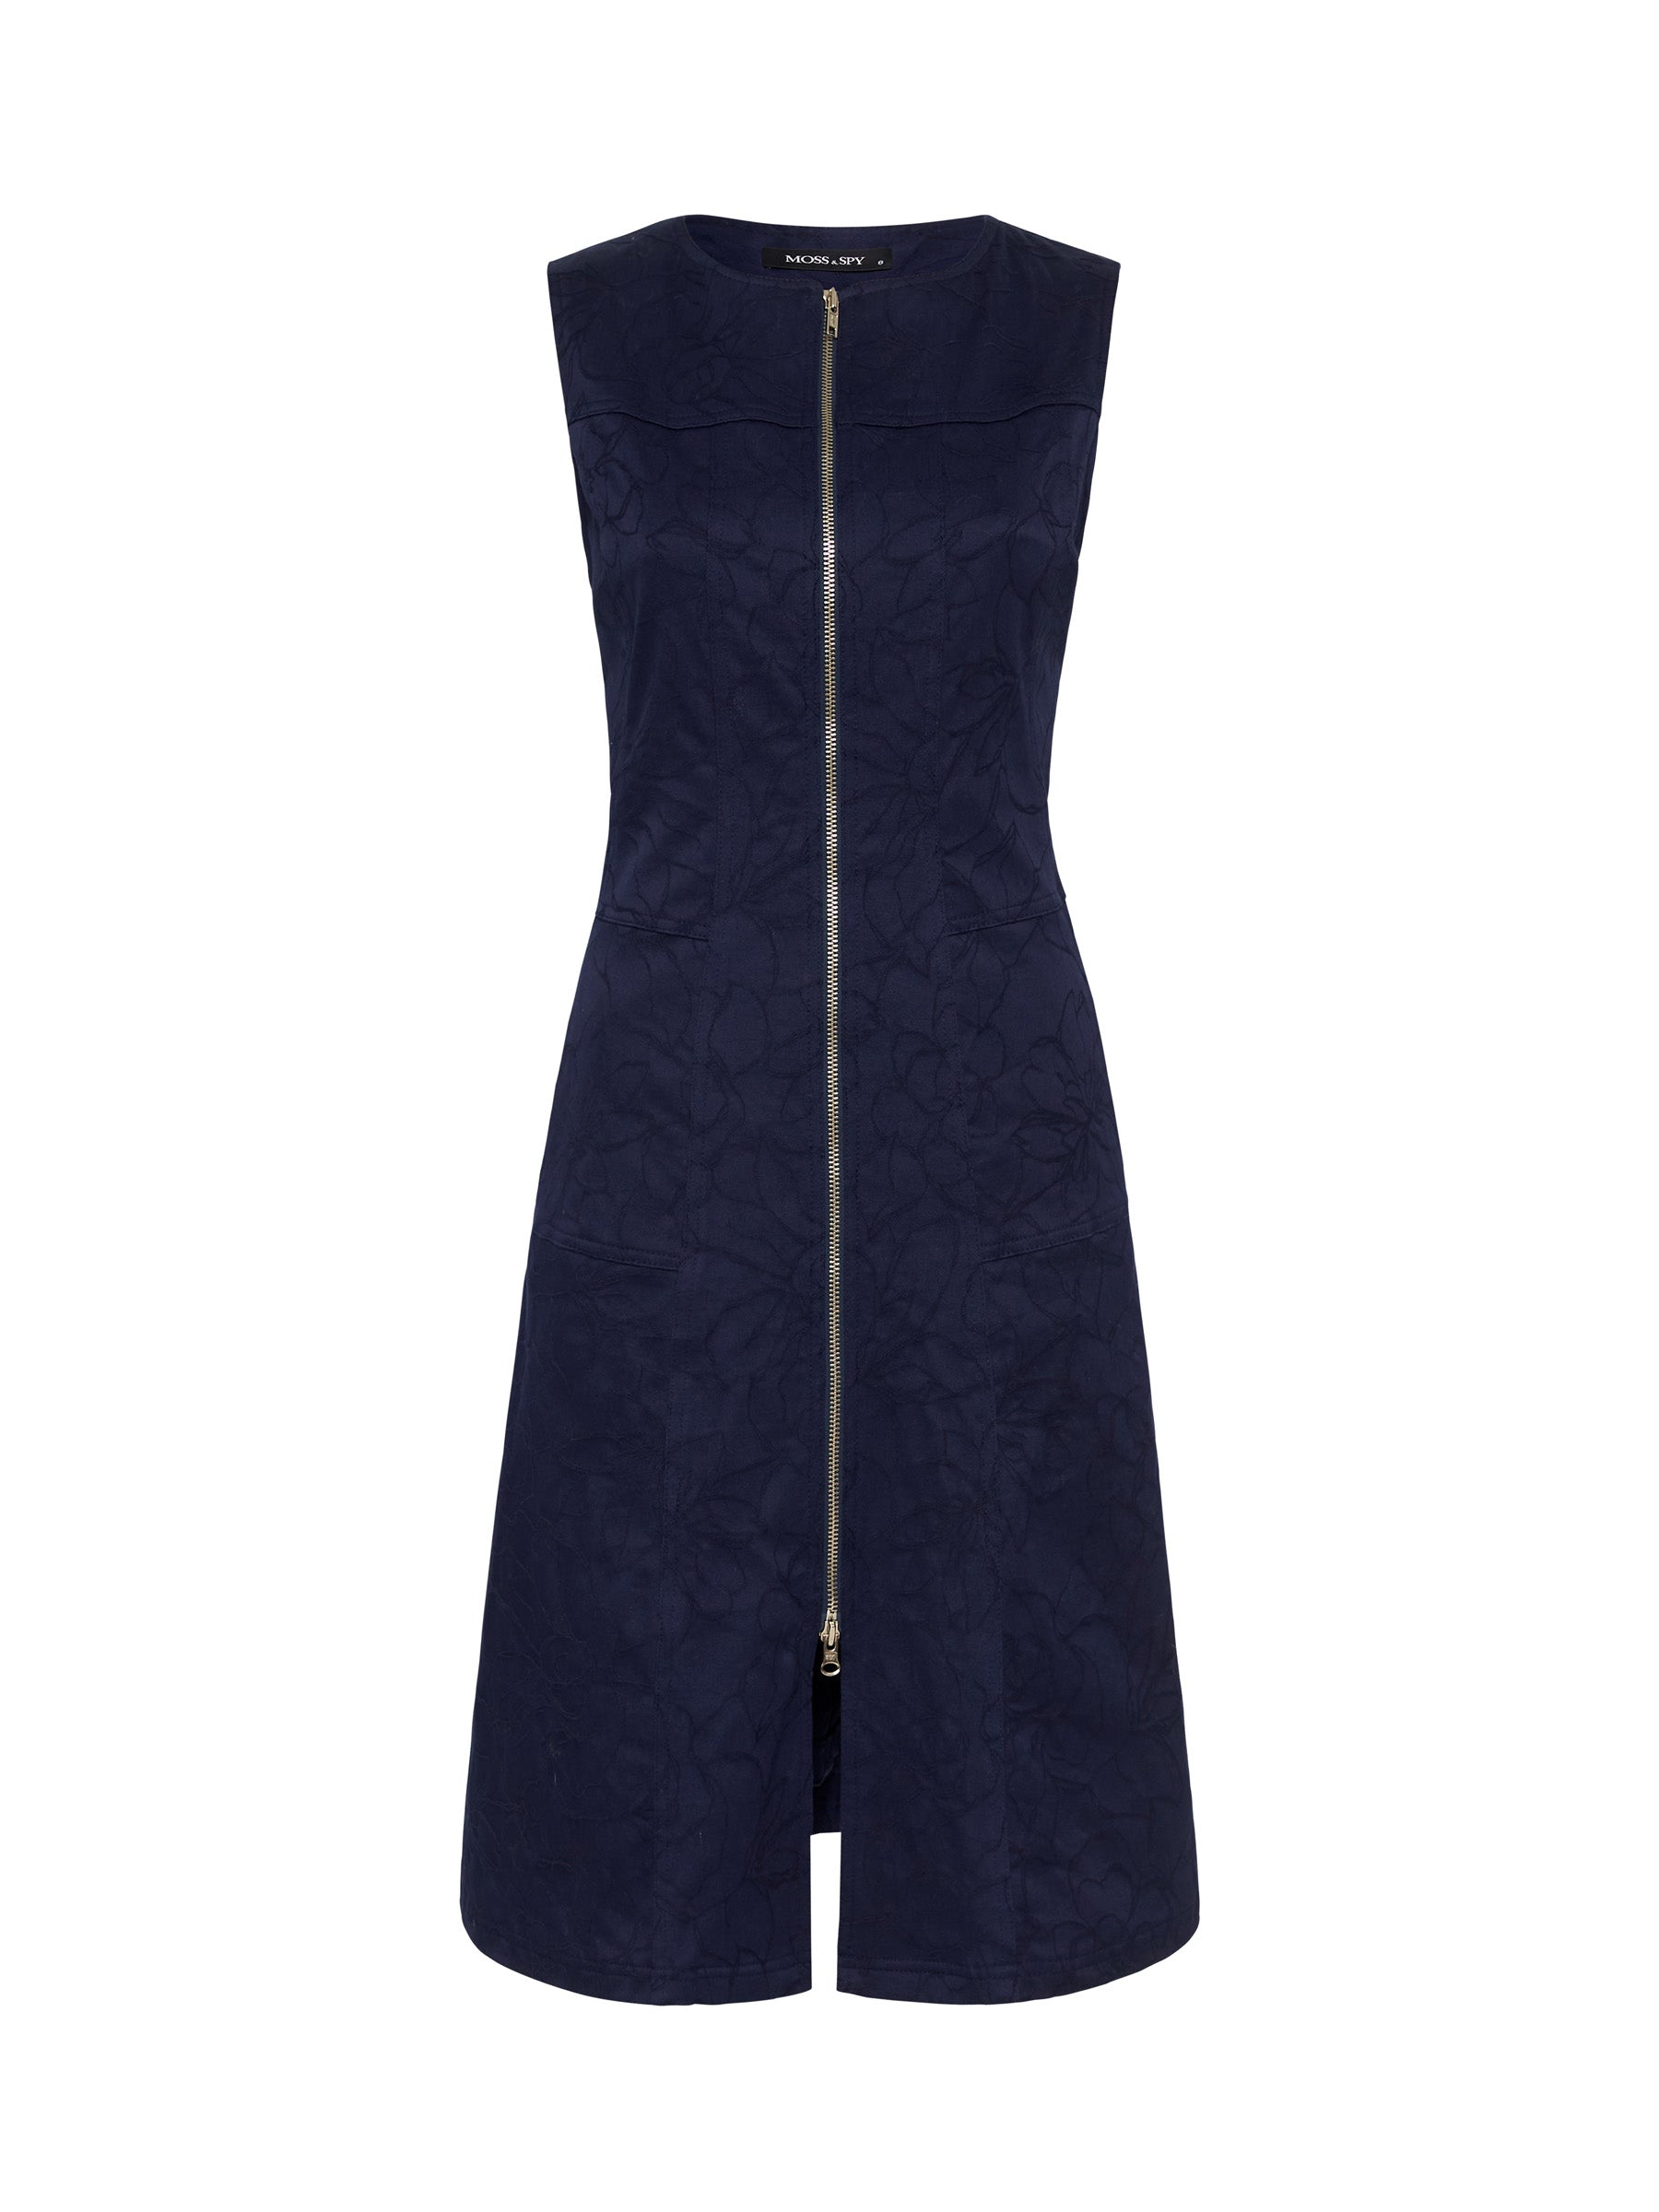 Leona Zip Dress - Marine Blue (Size 14 Only)